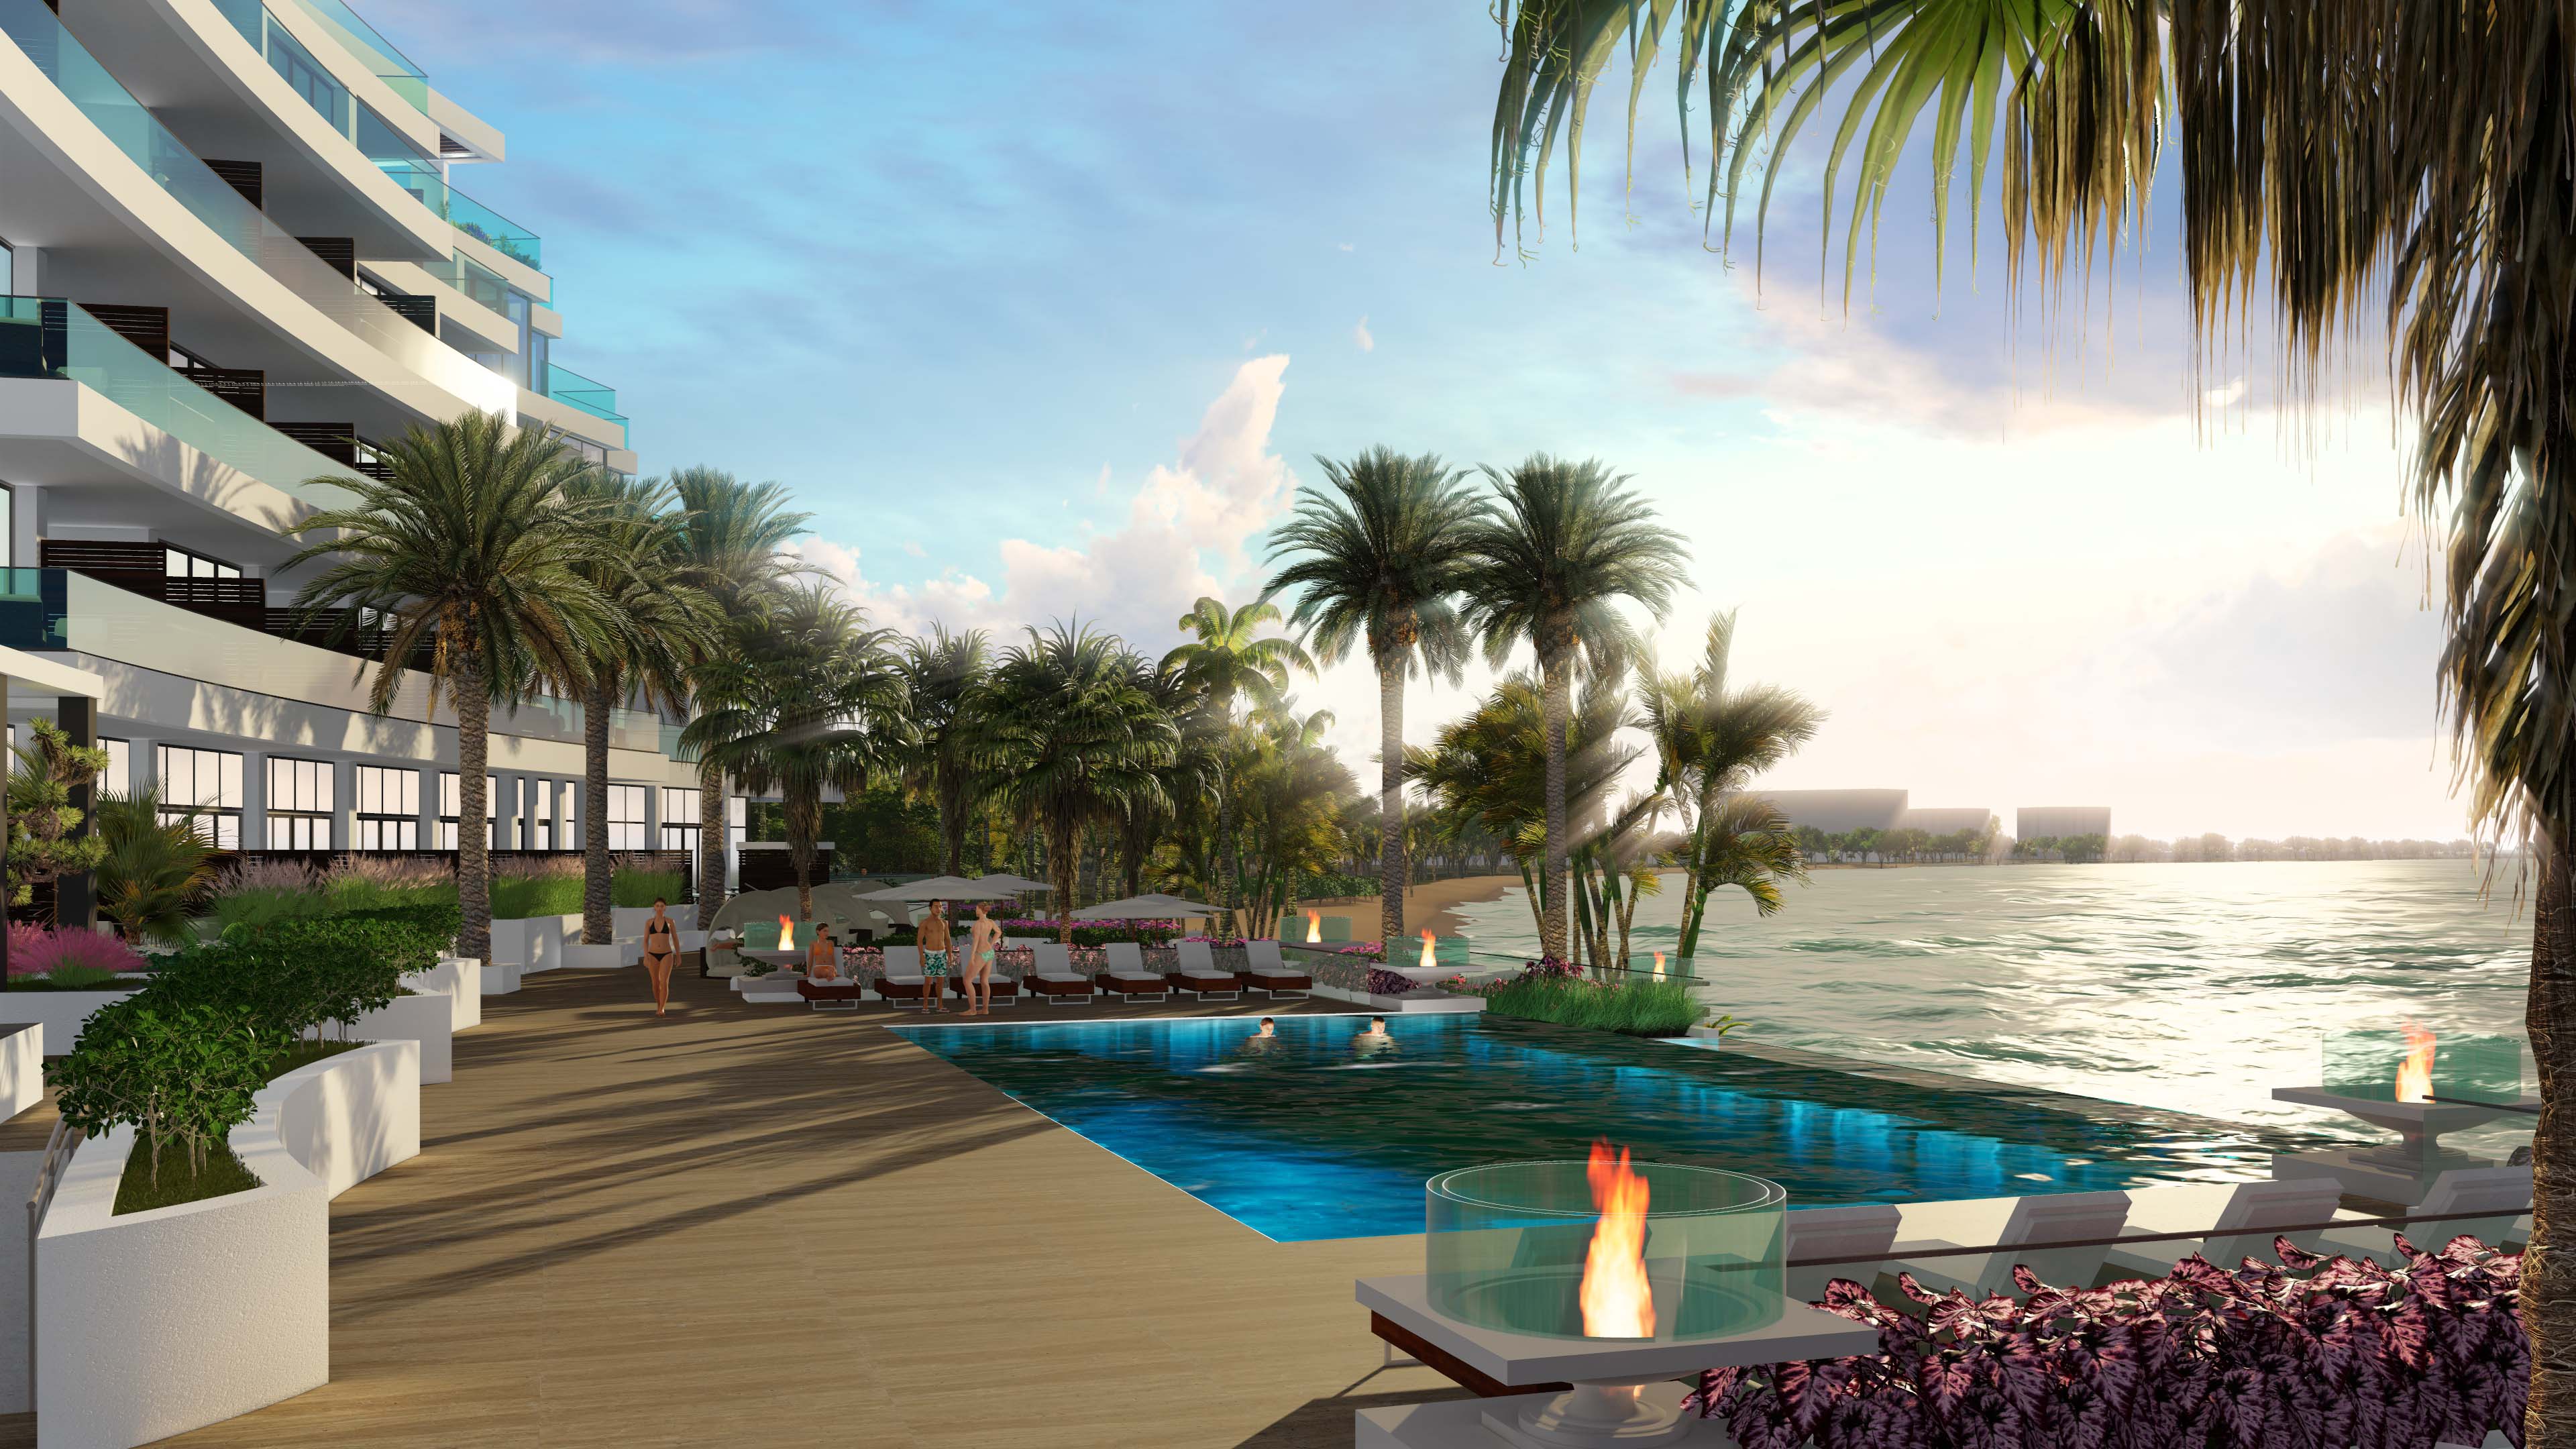 Pool - Resort Hotel Bahamas 